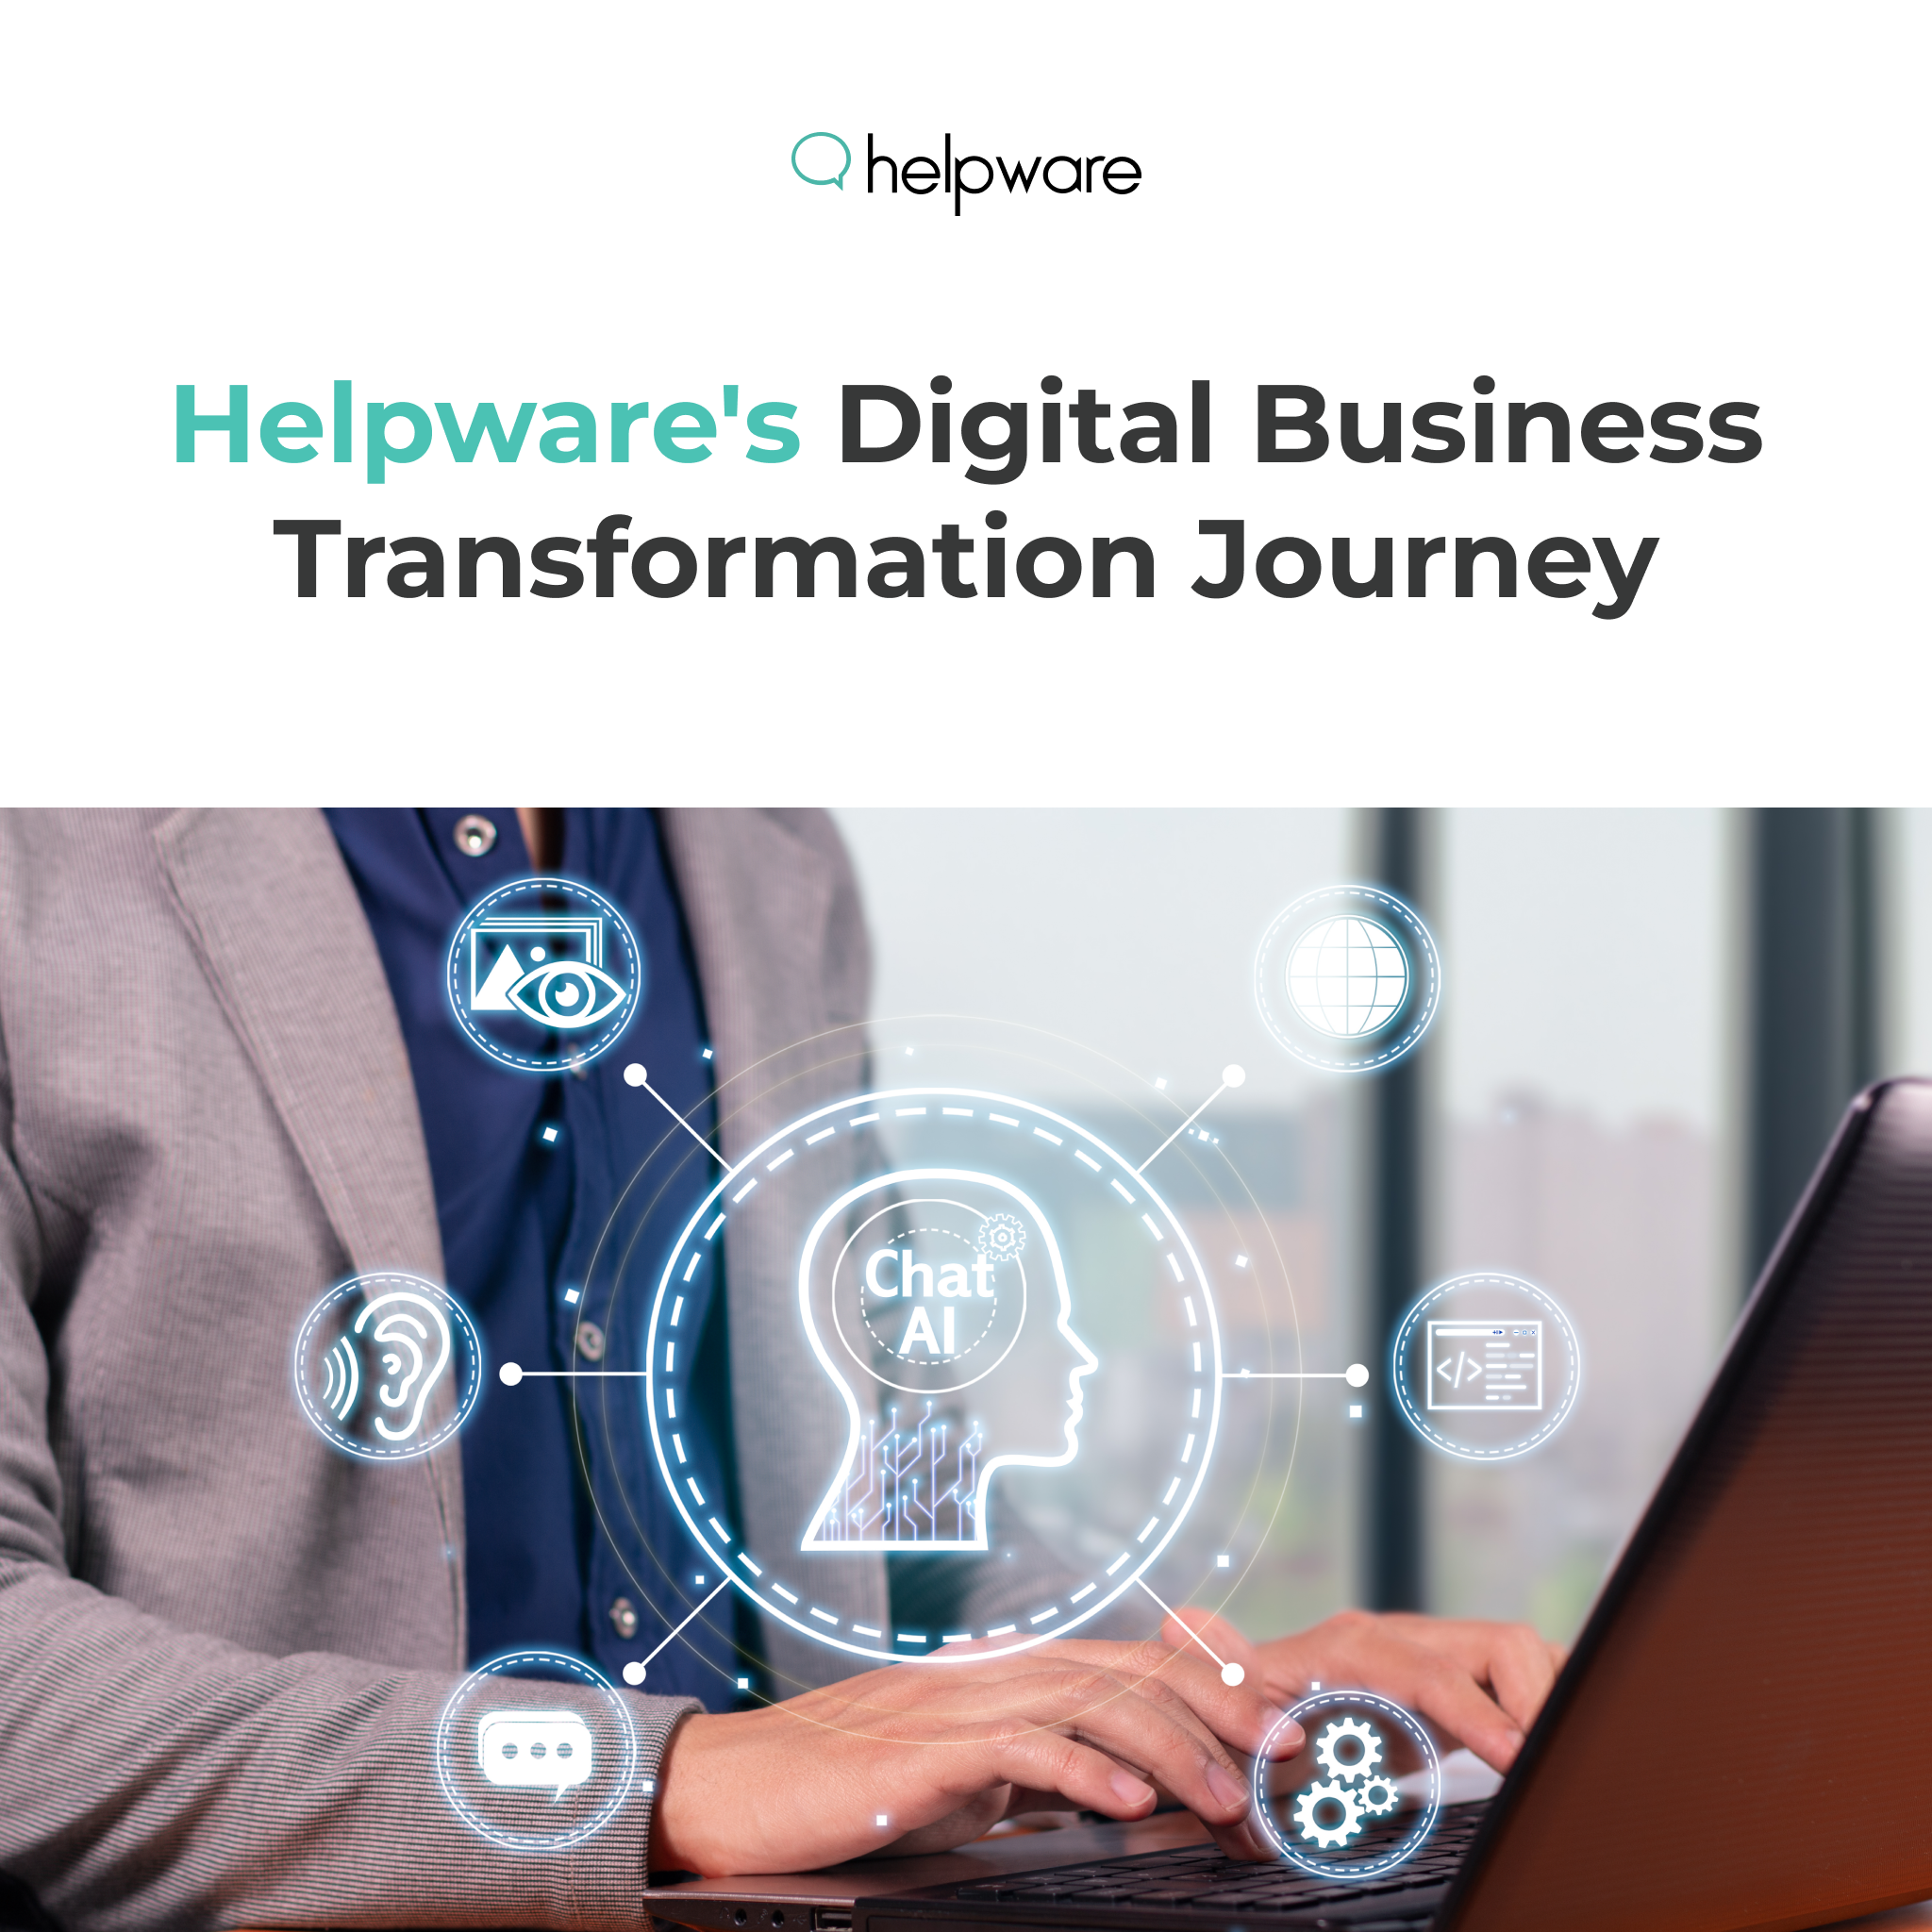 Helpware’s Digital Business Transformation Journey